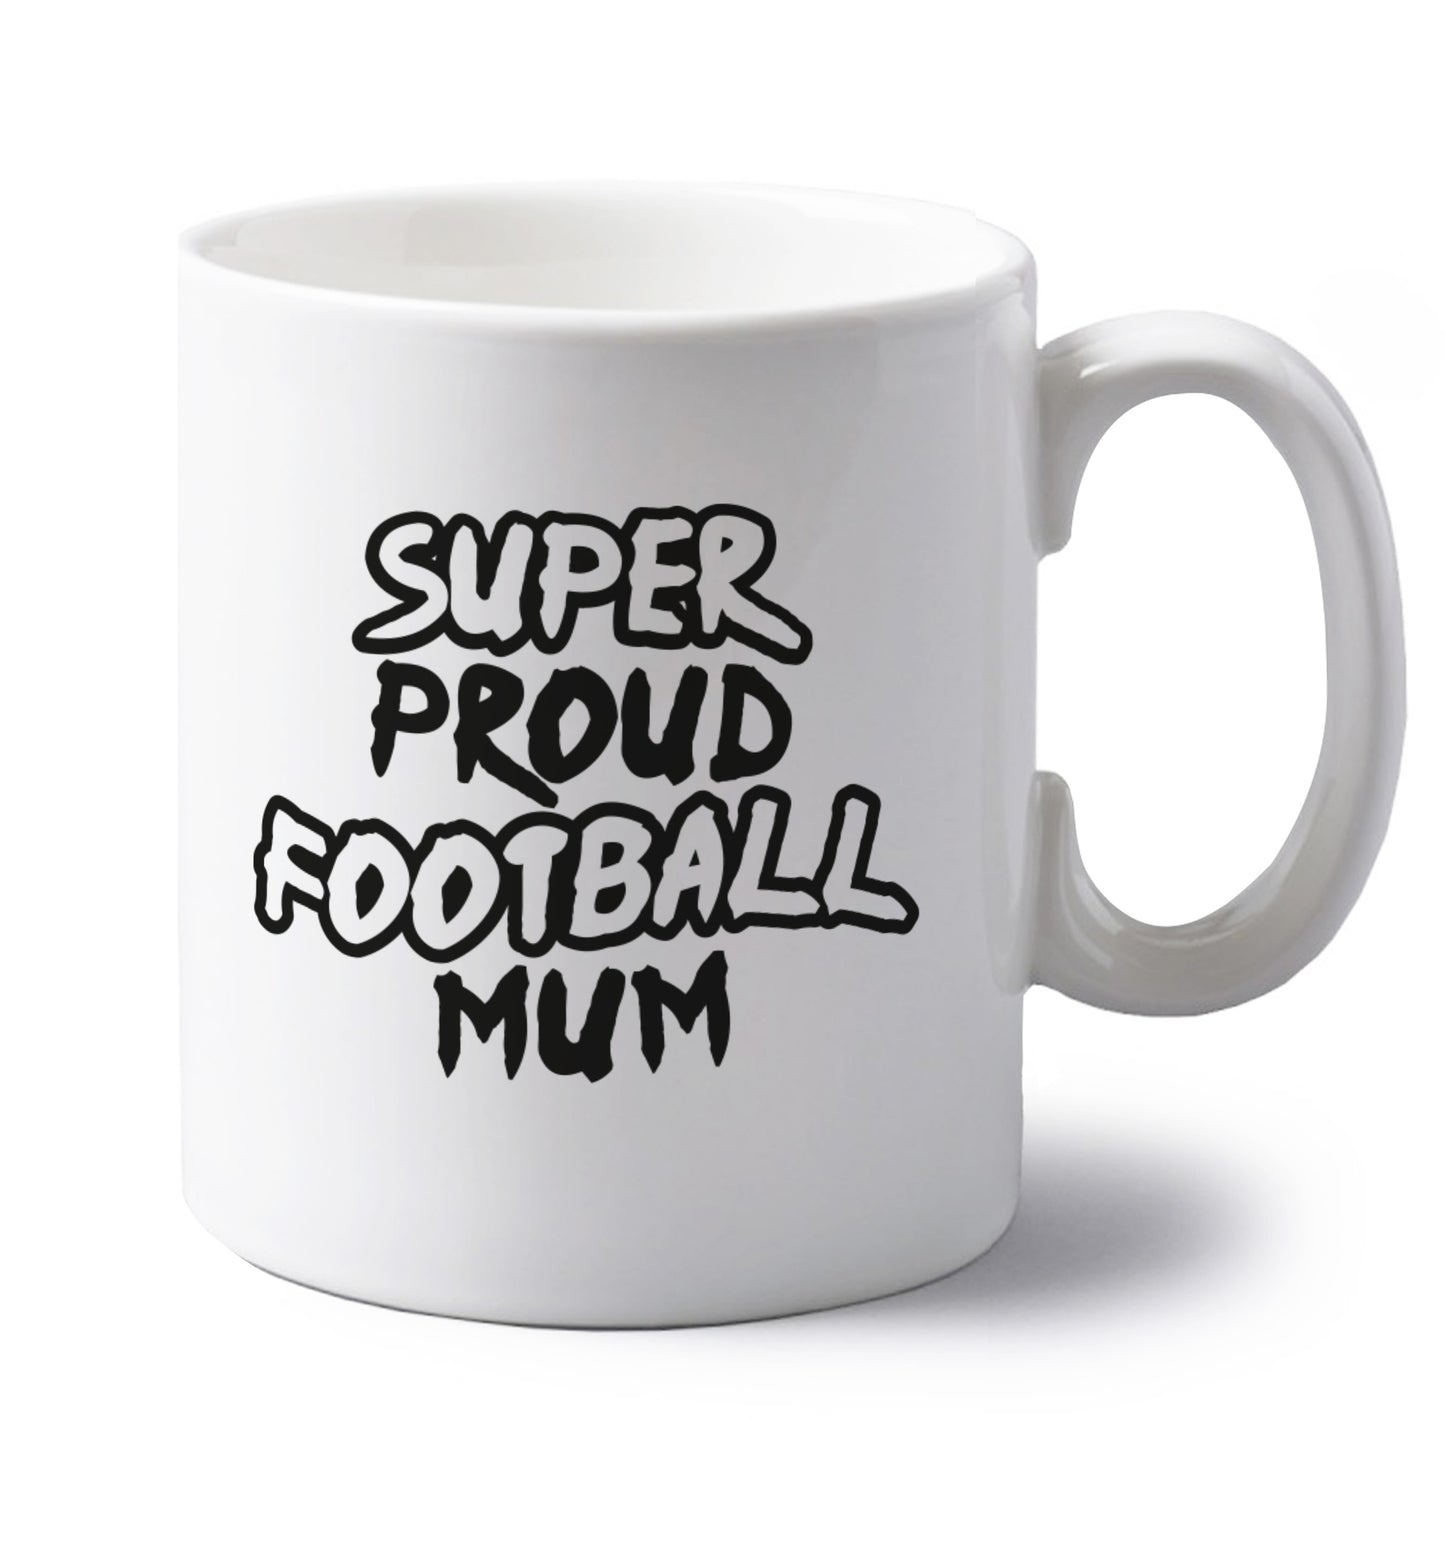 Super proud football mum left handed white ceramic mug 